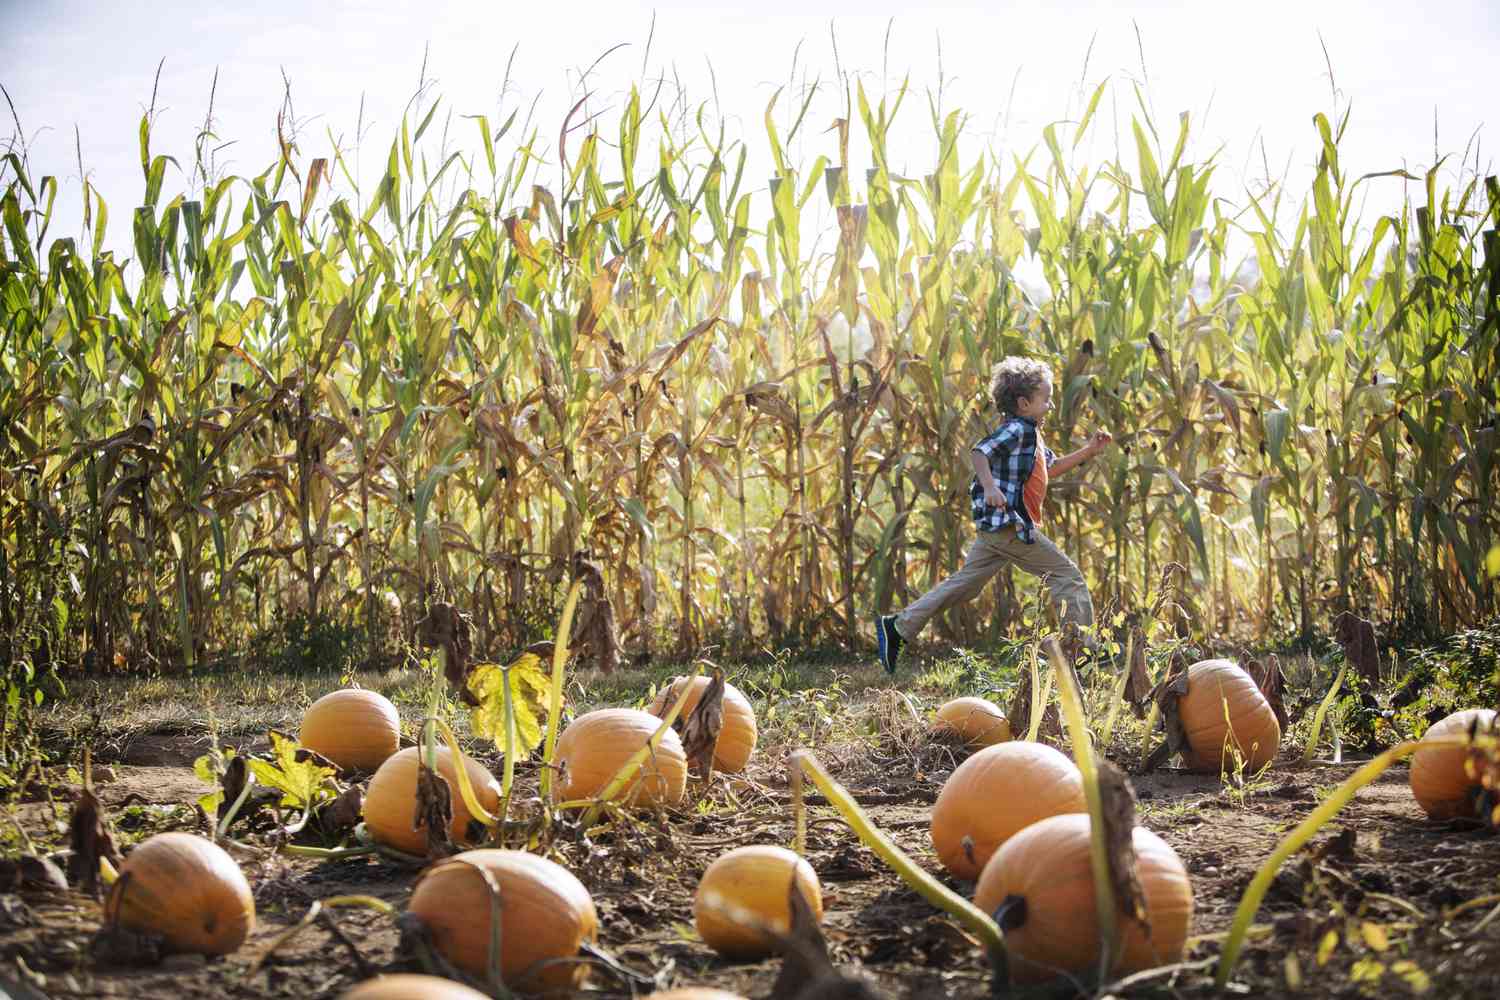 child running by pumpkins in farm